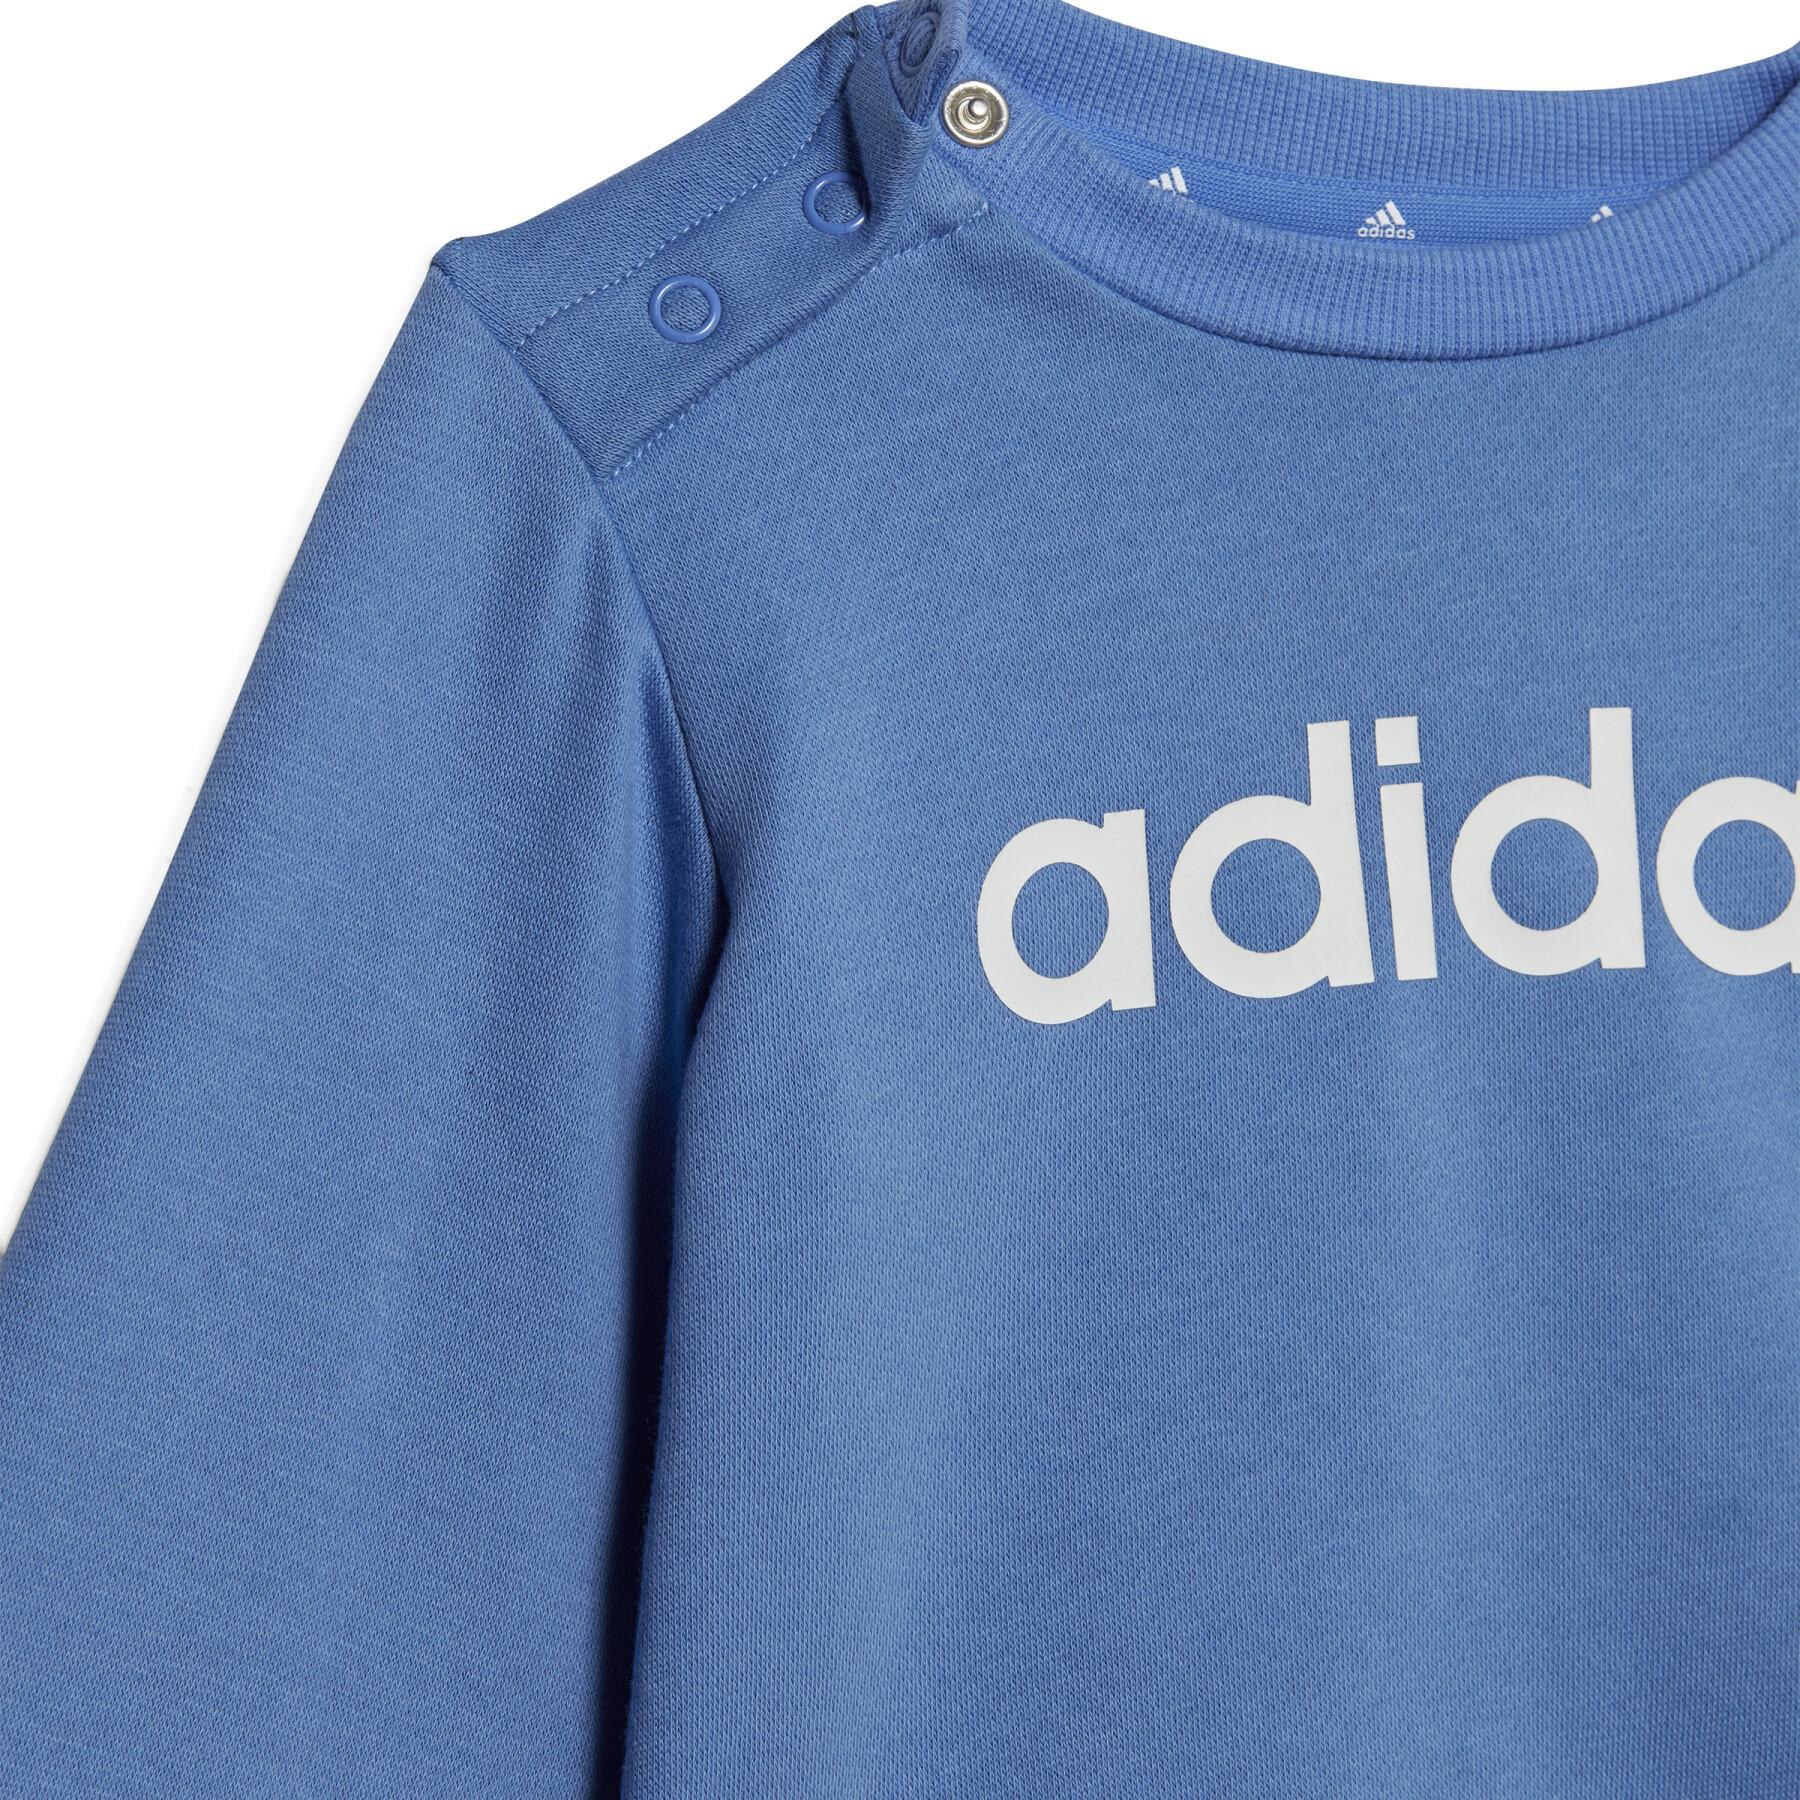 Baby-Trainingsanzug adidas Essentials Lineage